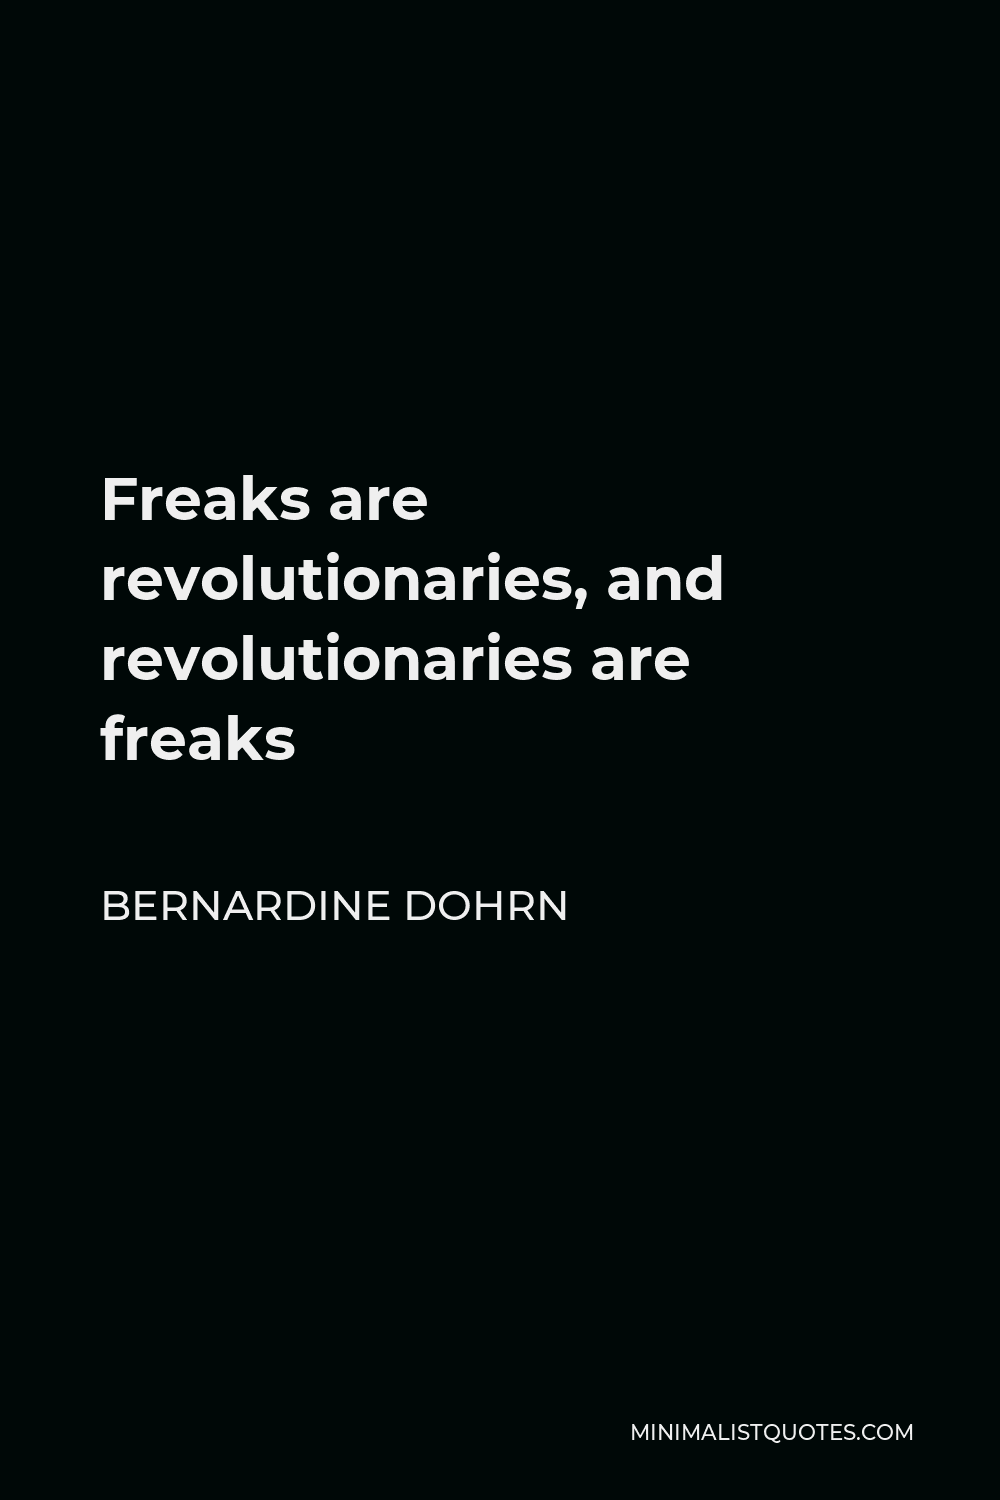 Bernardine Dohrn Quote - Freaks are revolutionaries, and revolutionaries are freaks